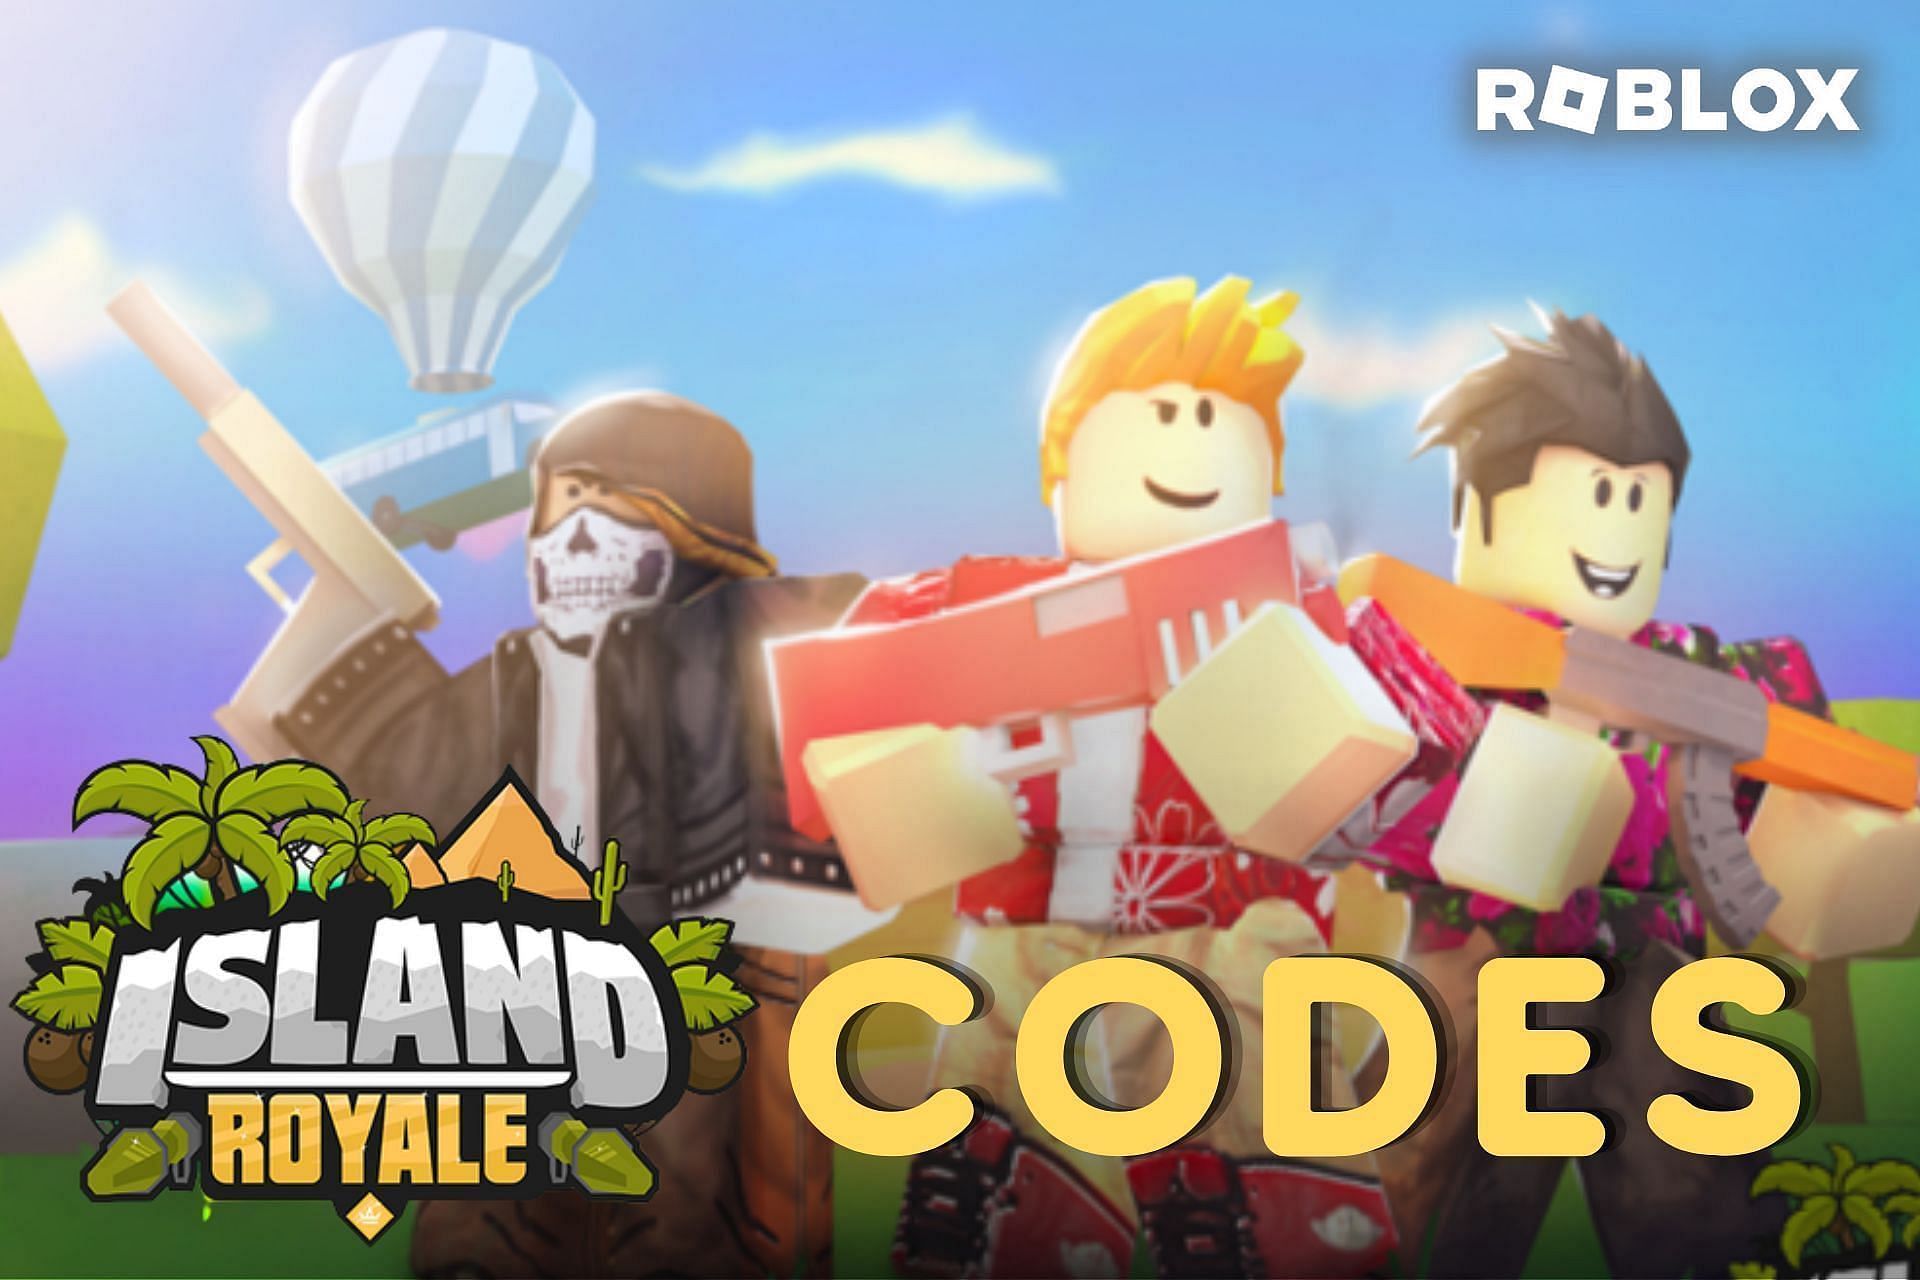 Island Royale codes (Image via Sportskeeda)